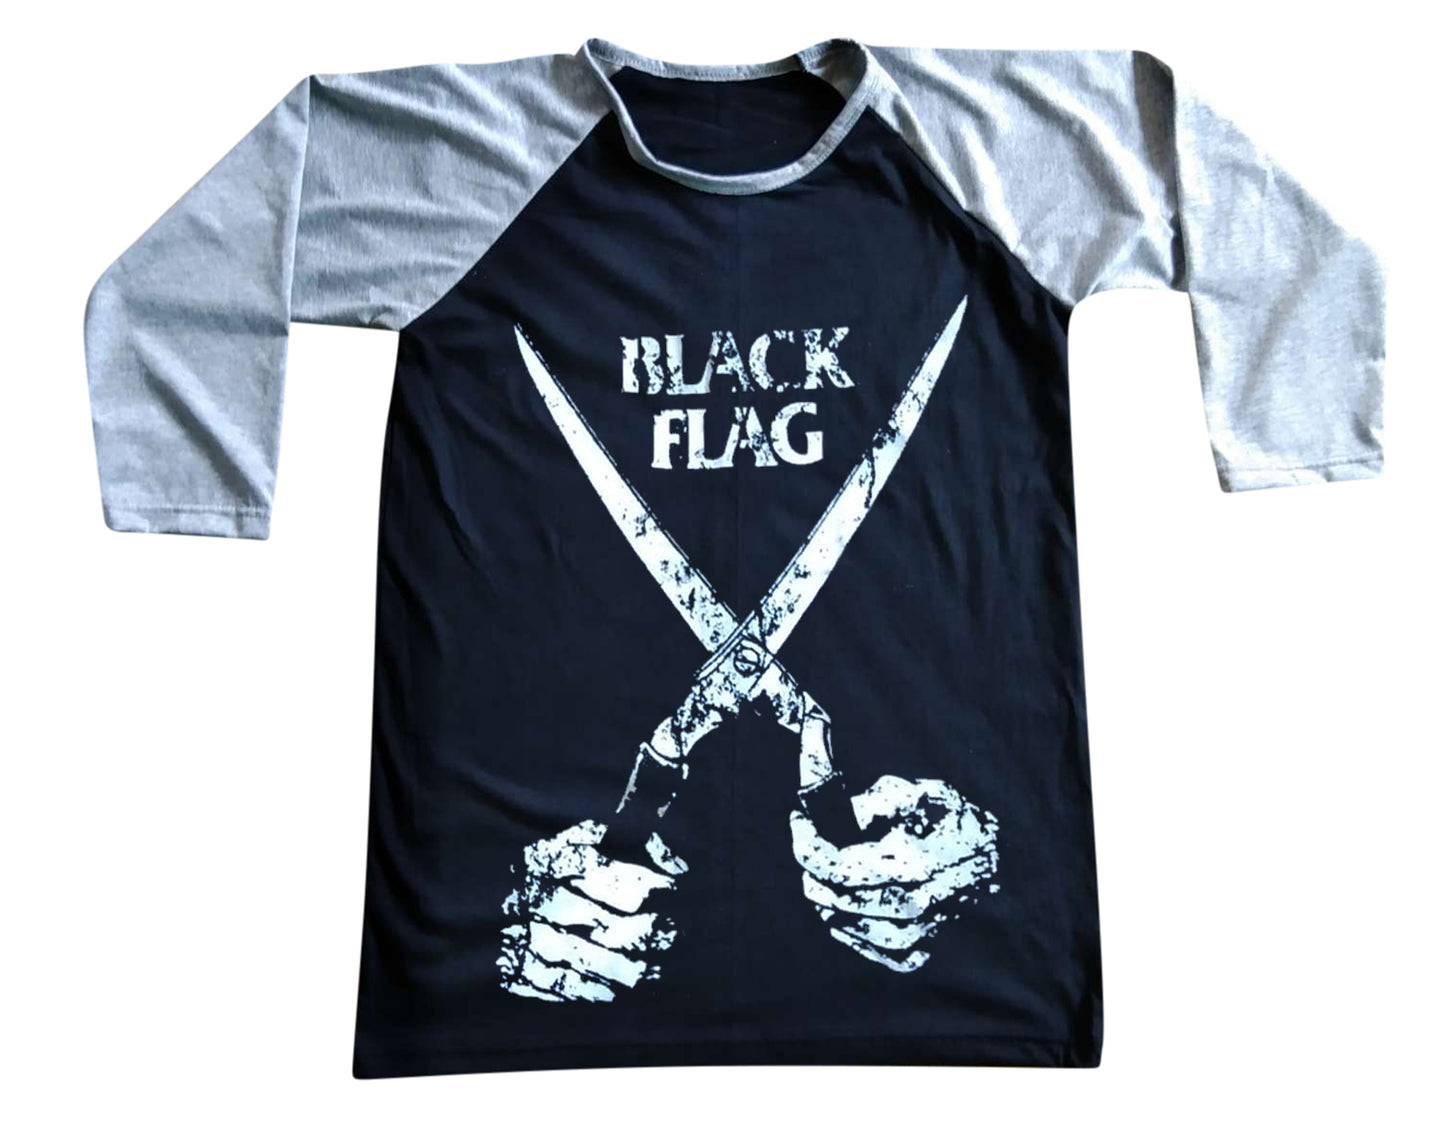 Unisex Black Flag Raglan 3/4 Sleeve Baseball T-Shirt